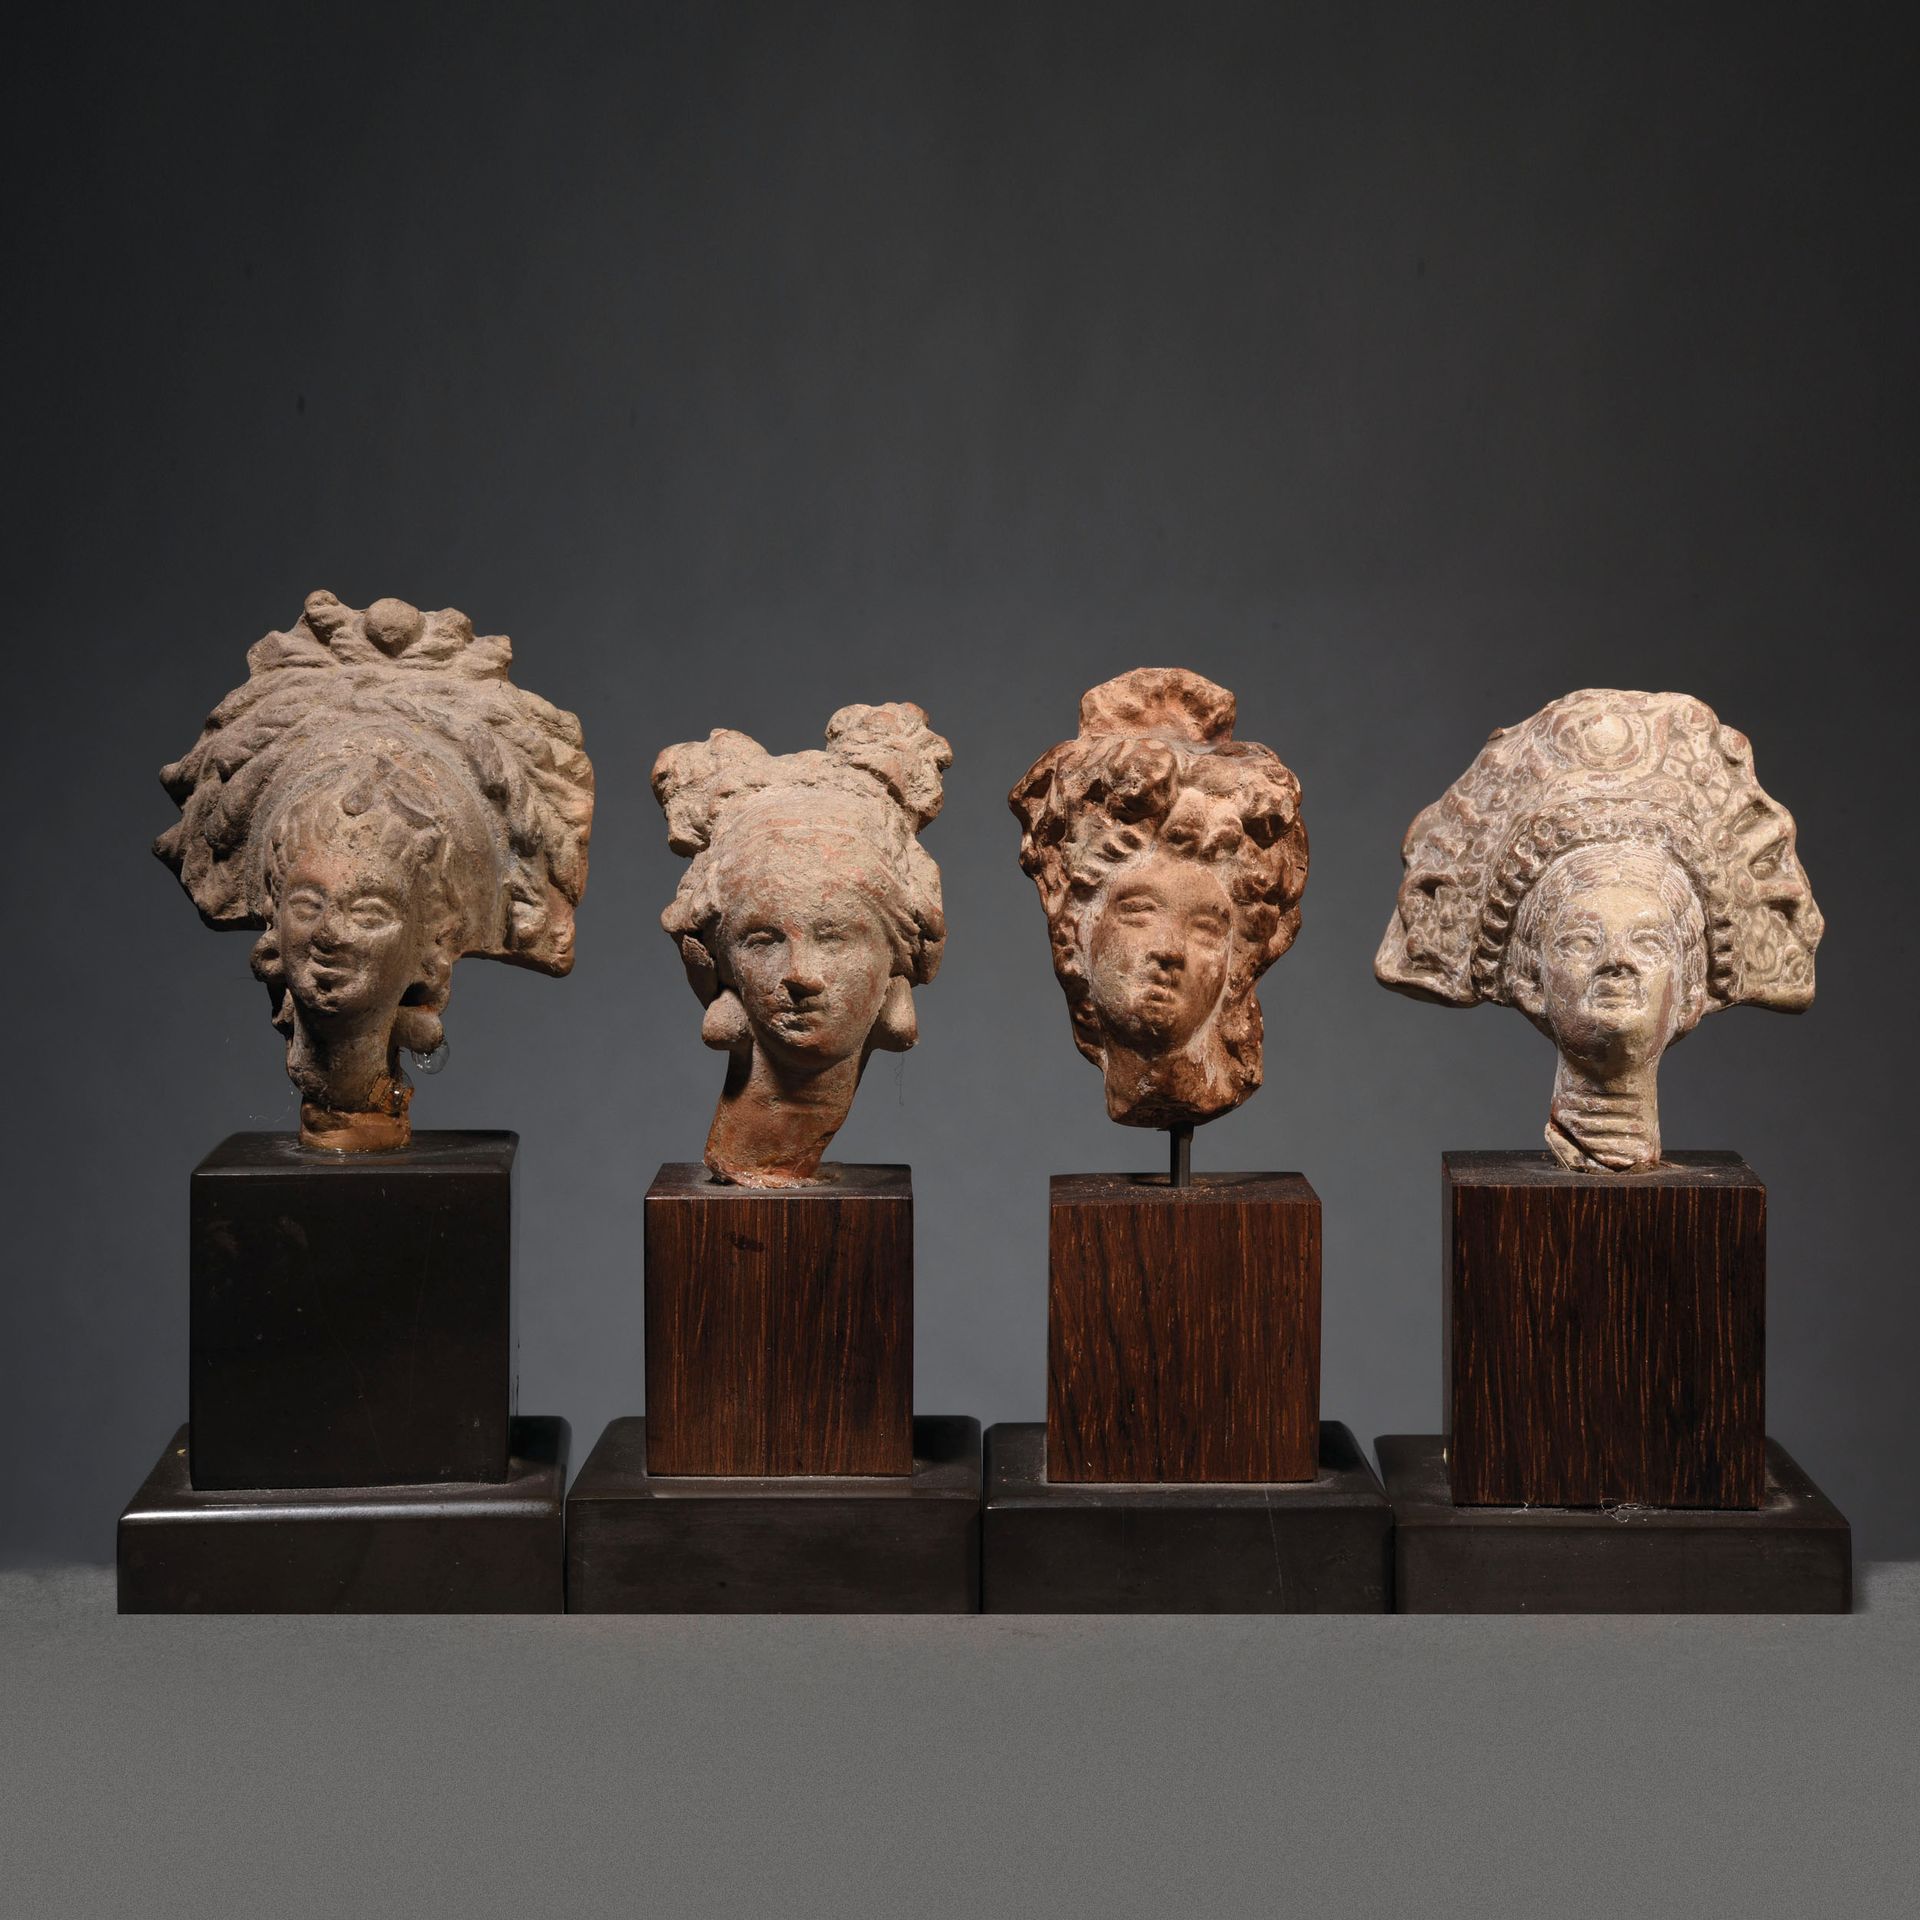 Null 一套4个前女神头像

希腊化的艺术

在陶土中



出处

前L先生的收藏，1980年代。



一组4个希腊化的陶器前头像。